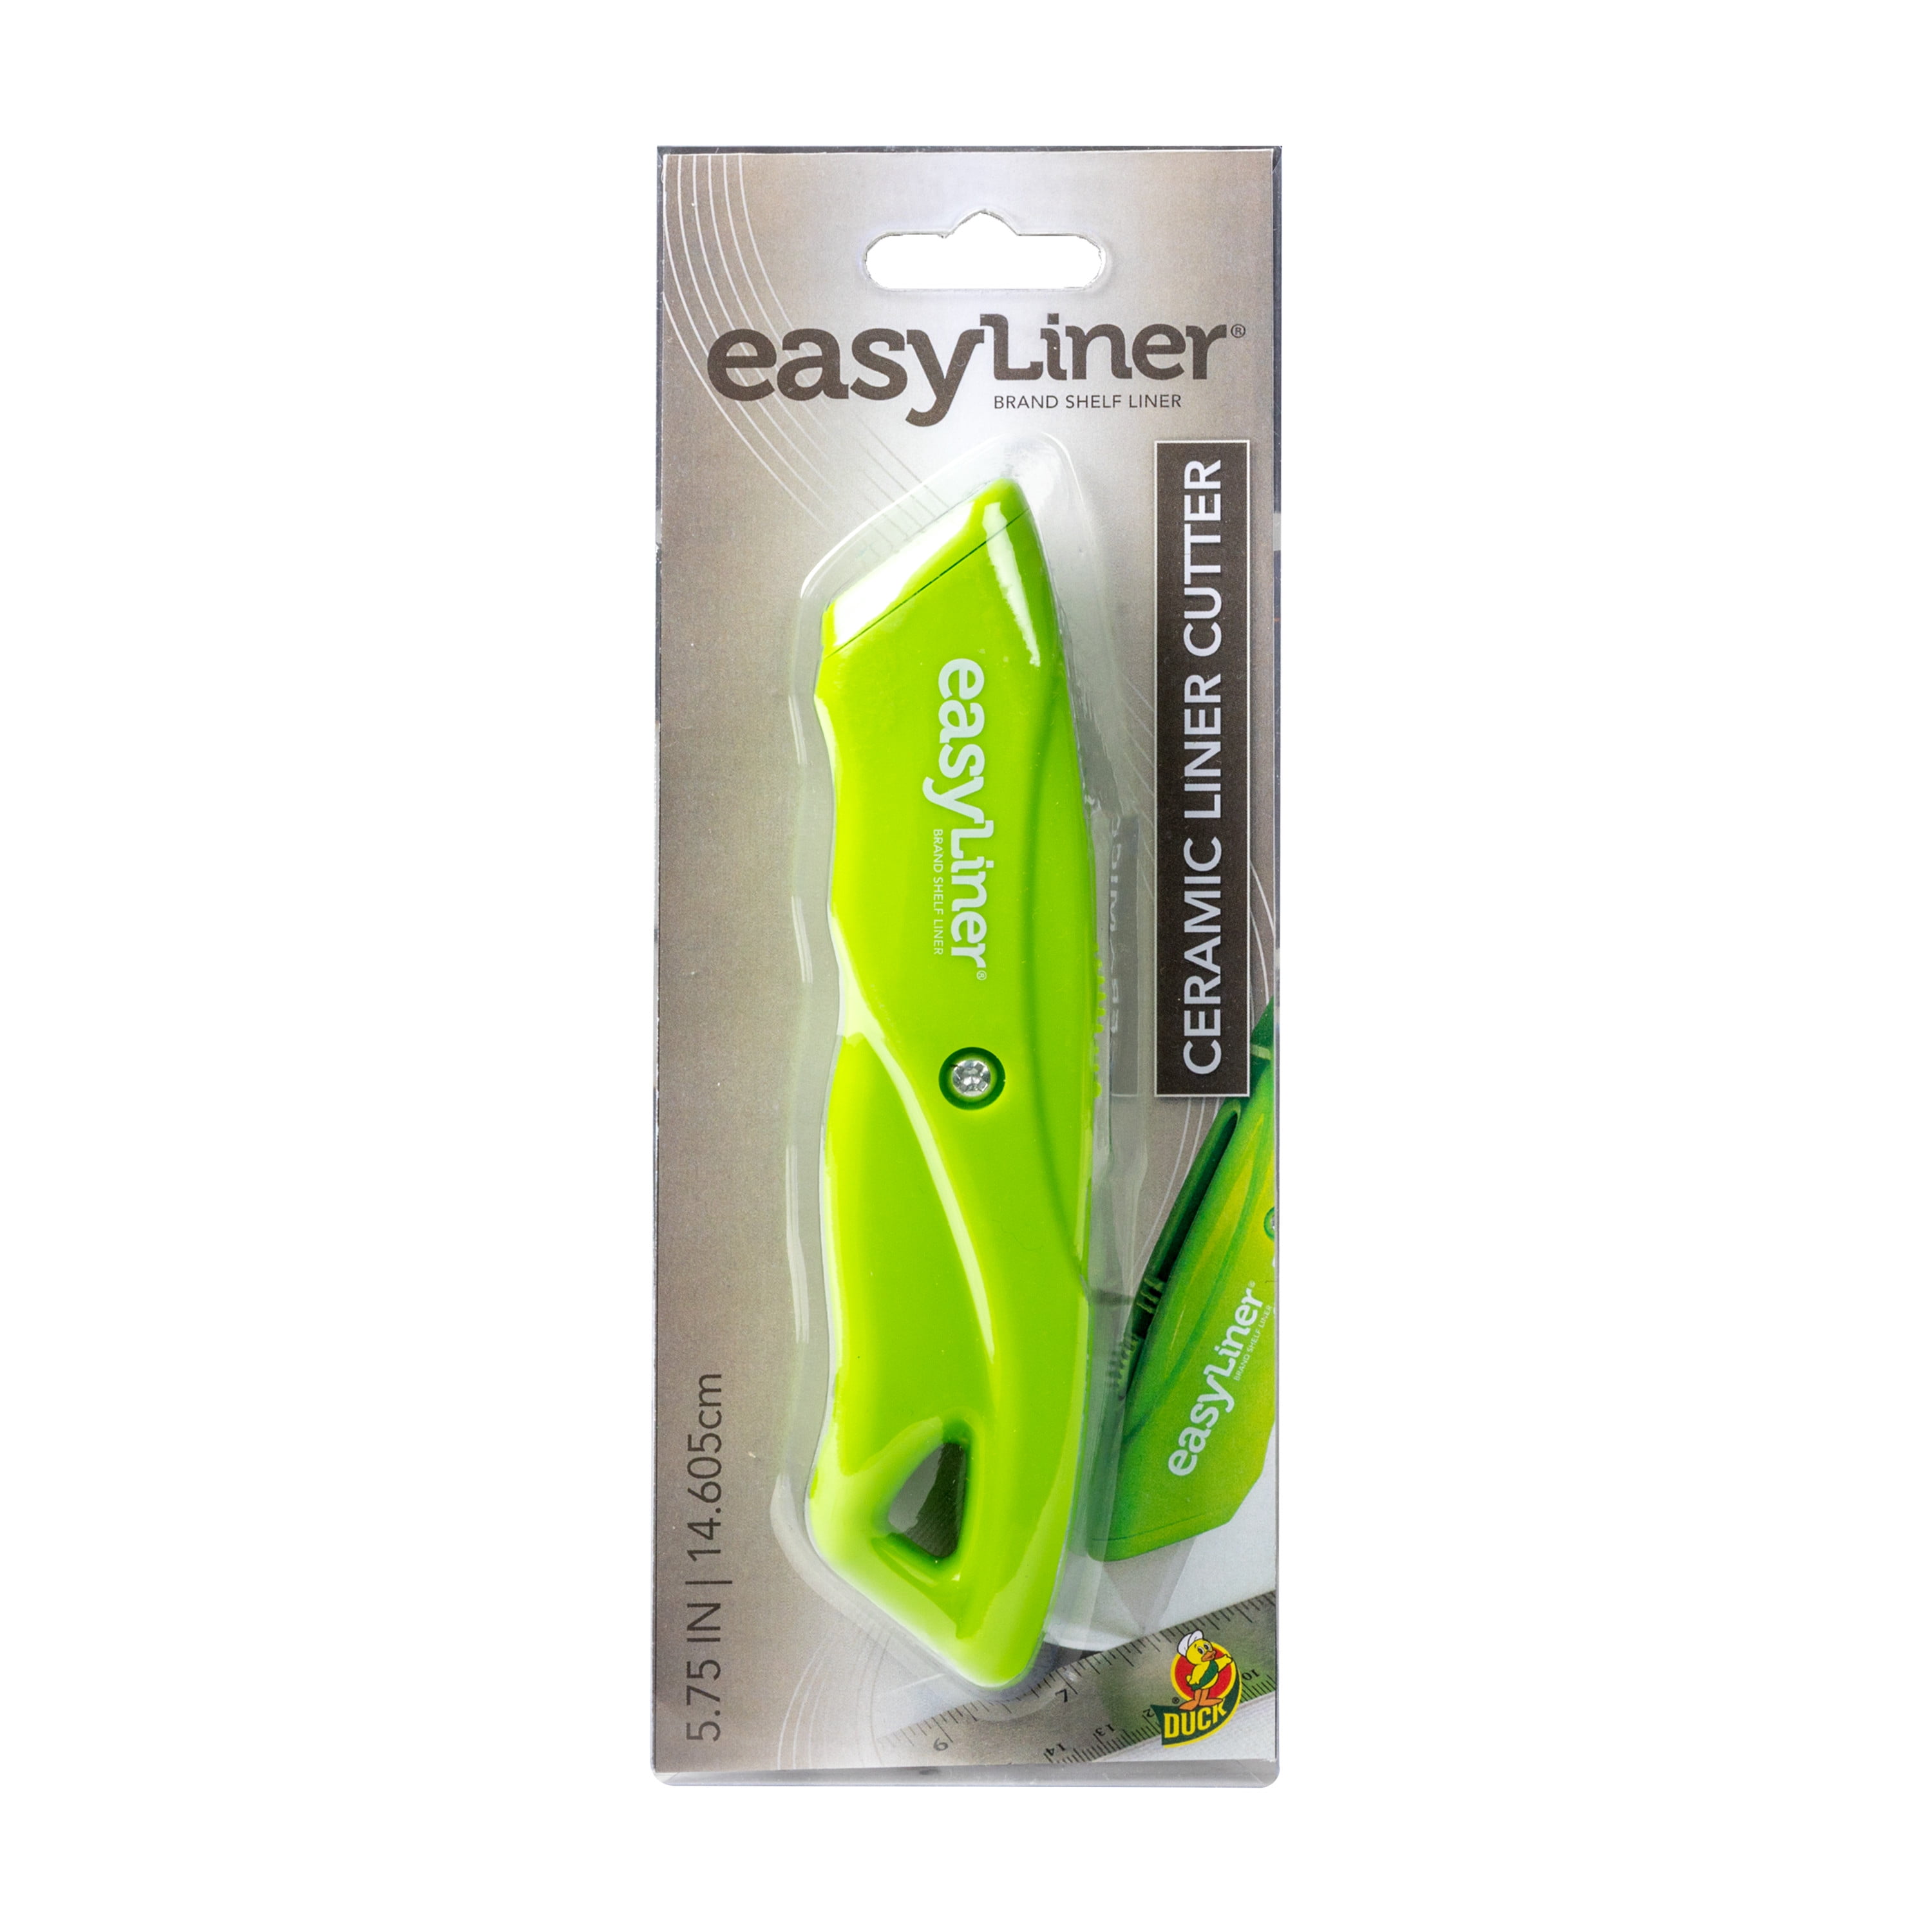 Easyliner Brand 5.75 Inches Green Shelf Liner Cutter